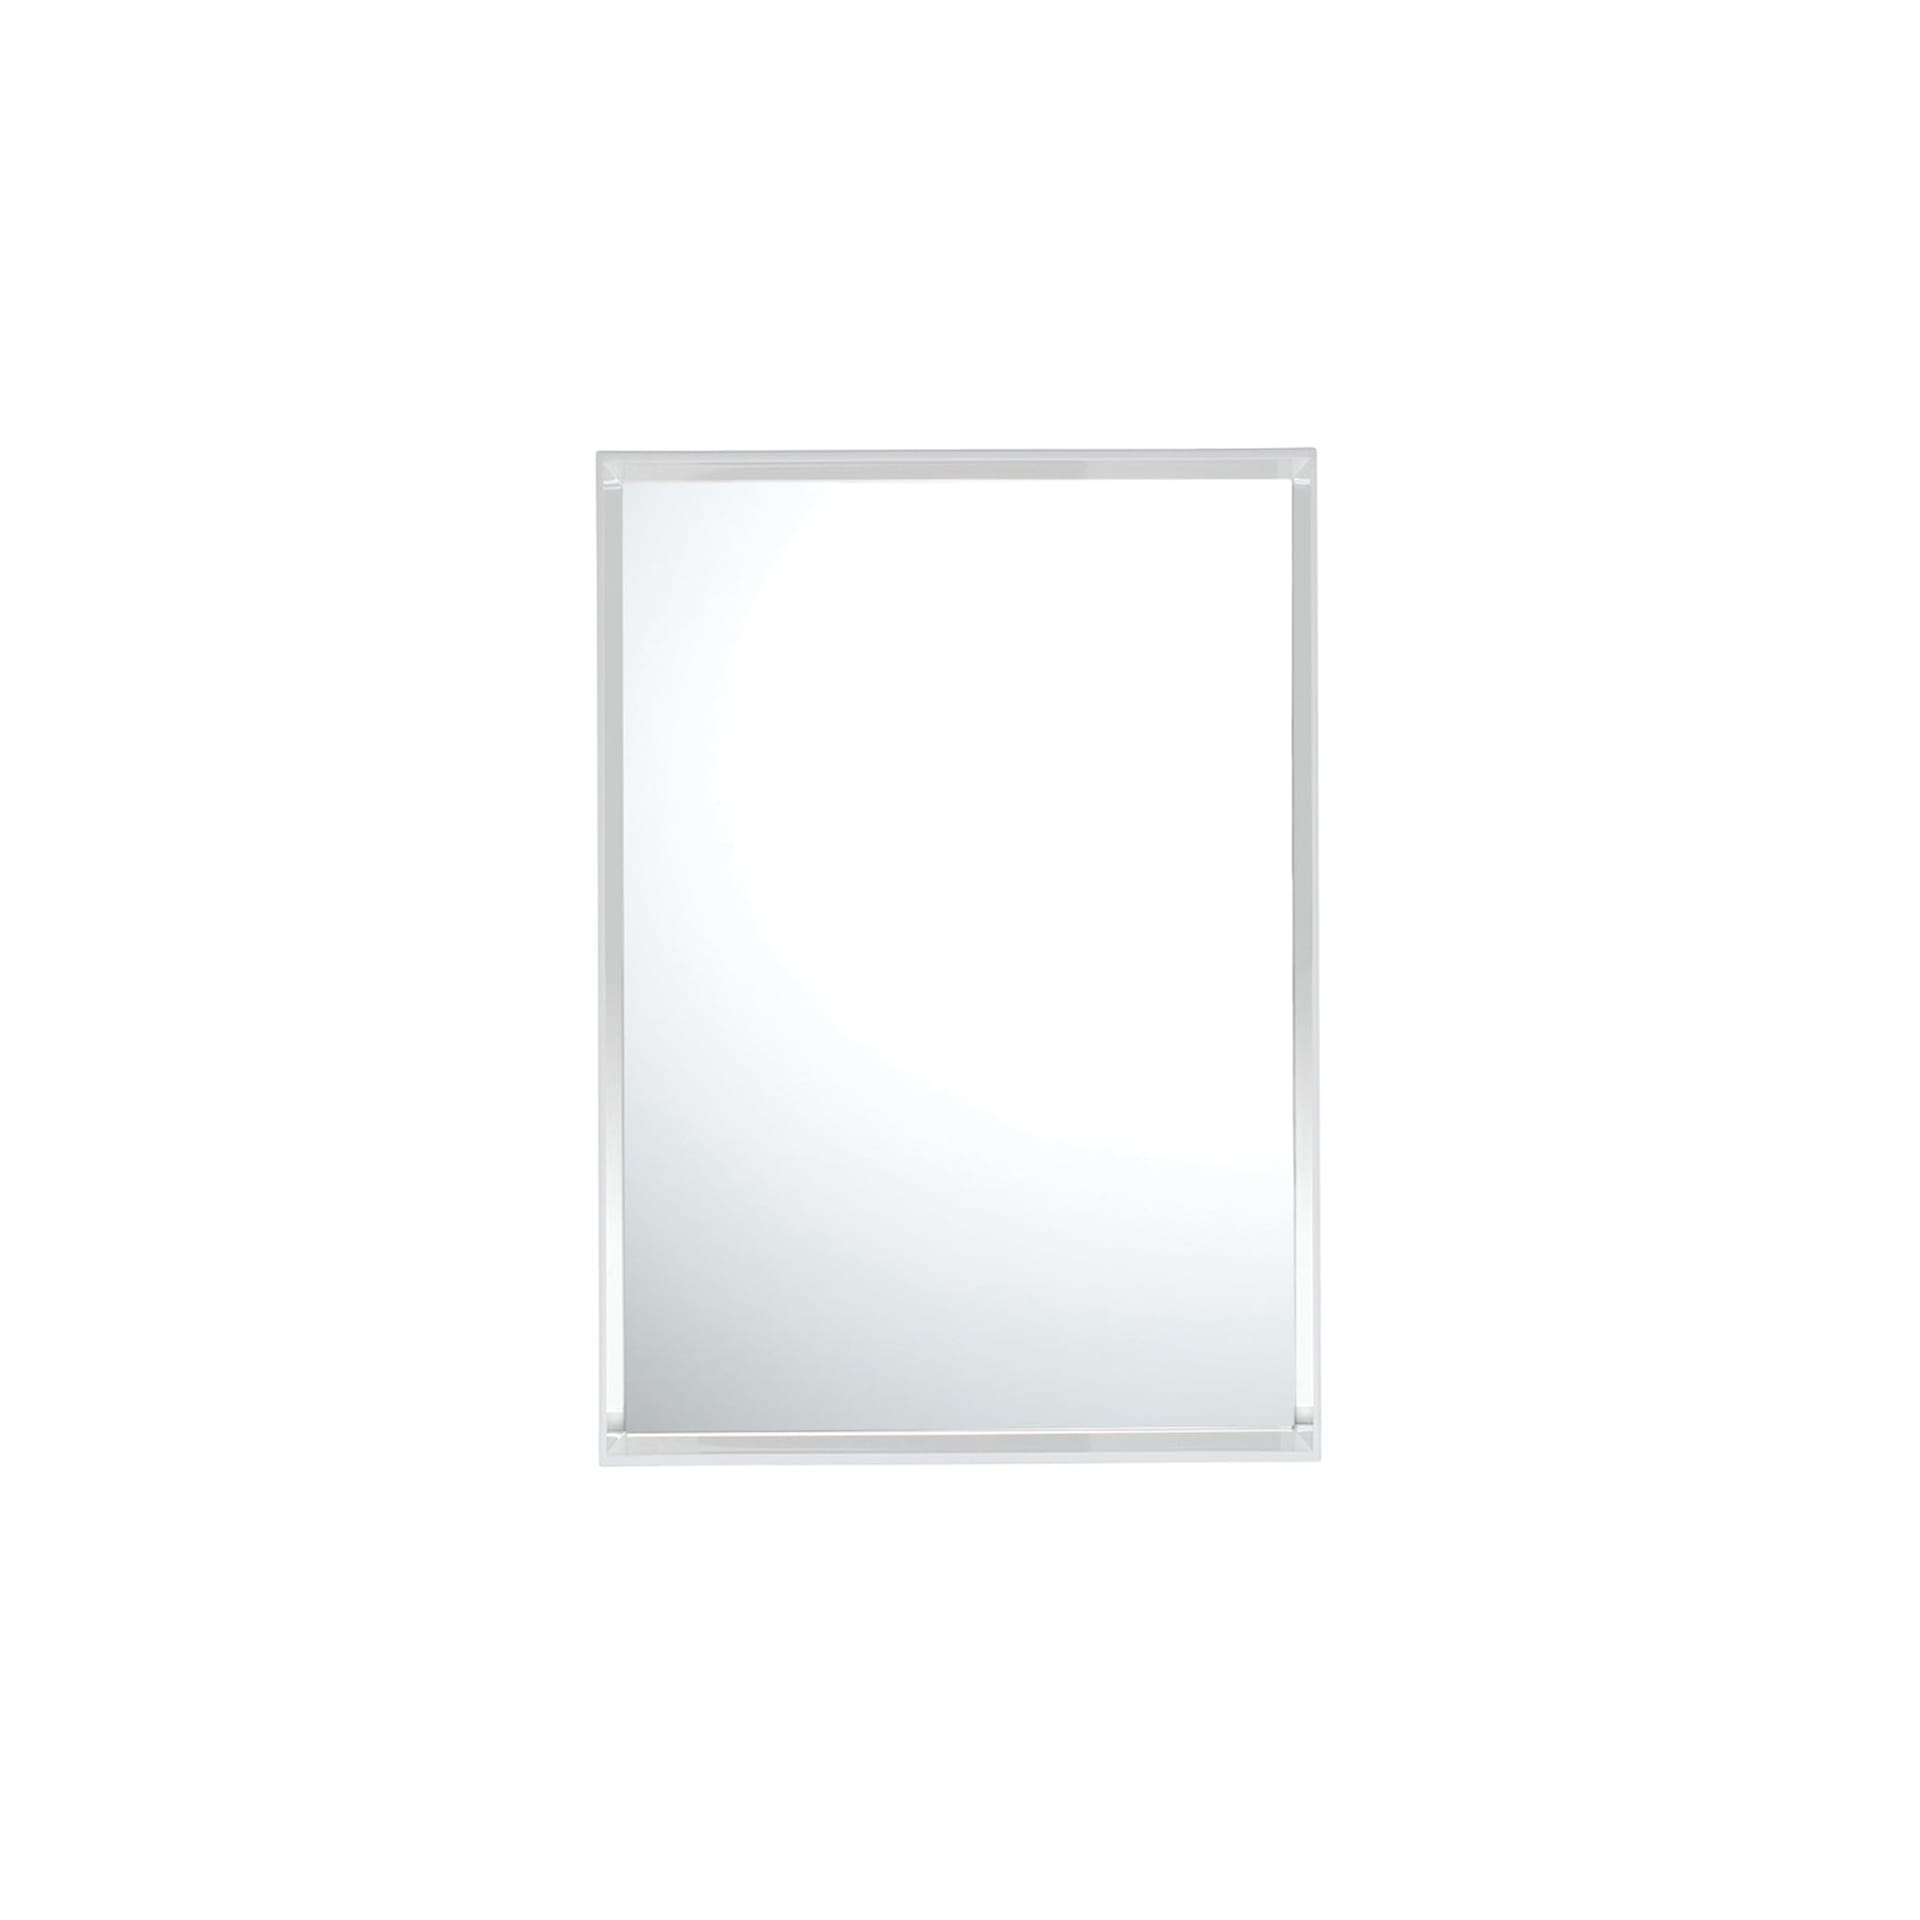 Only Me Mirror - Kartell - Philippe Starck - NO GA